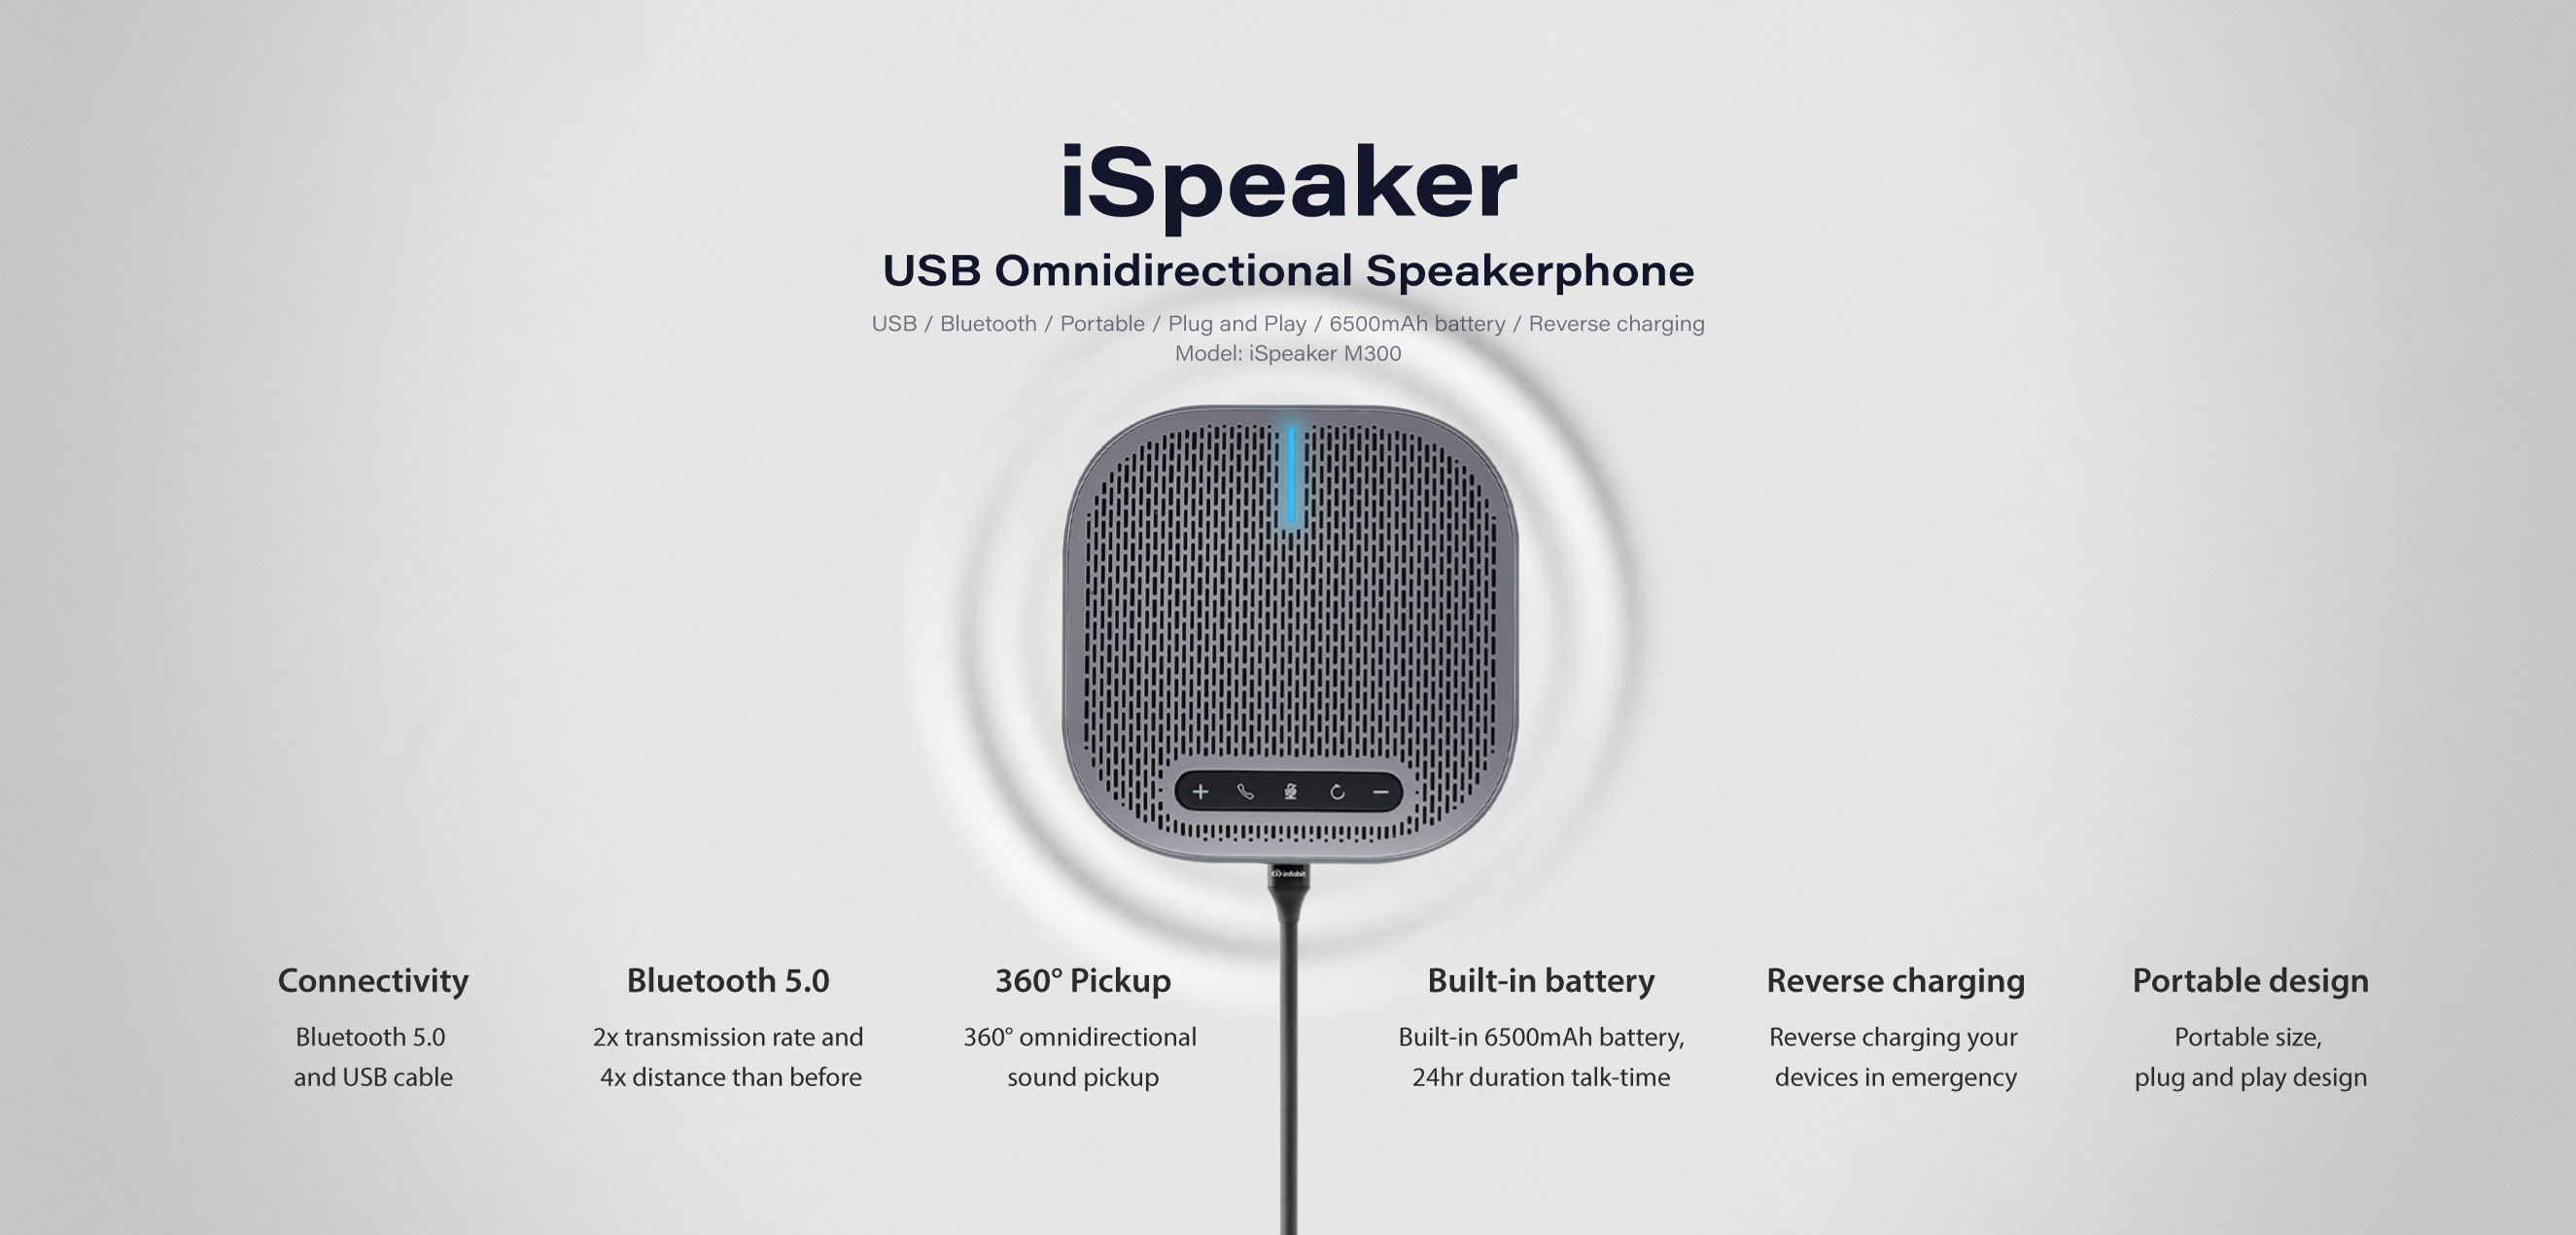 iSpeaker M300: USB Omnidirectional Speakerphone